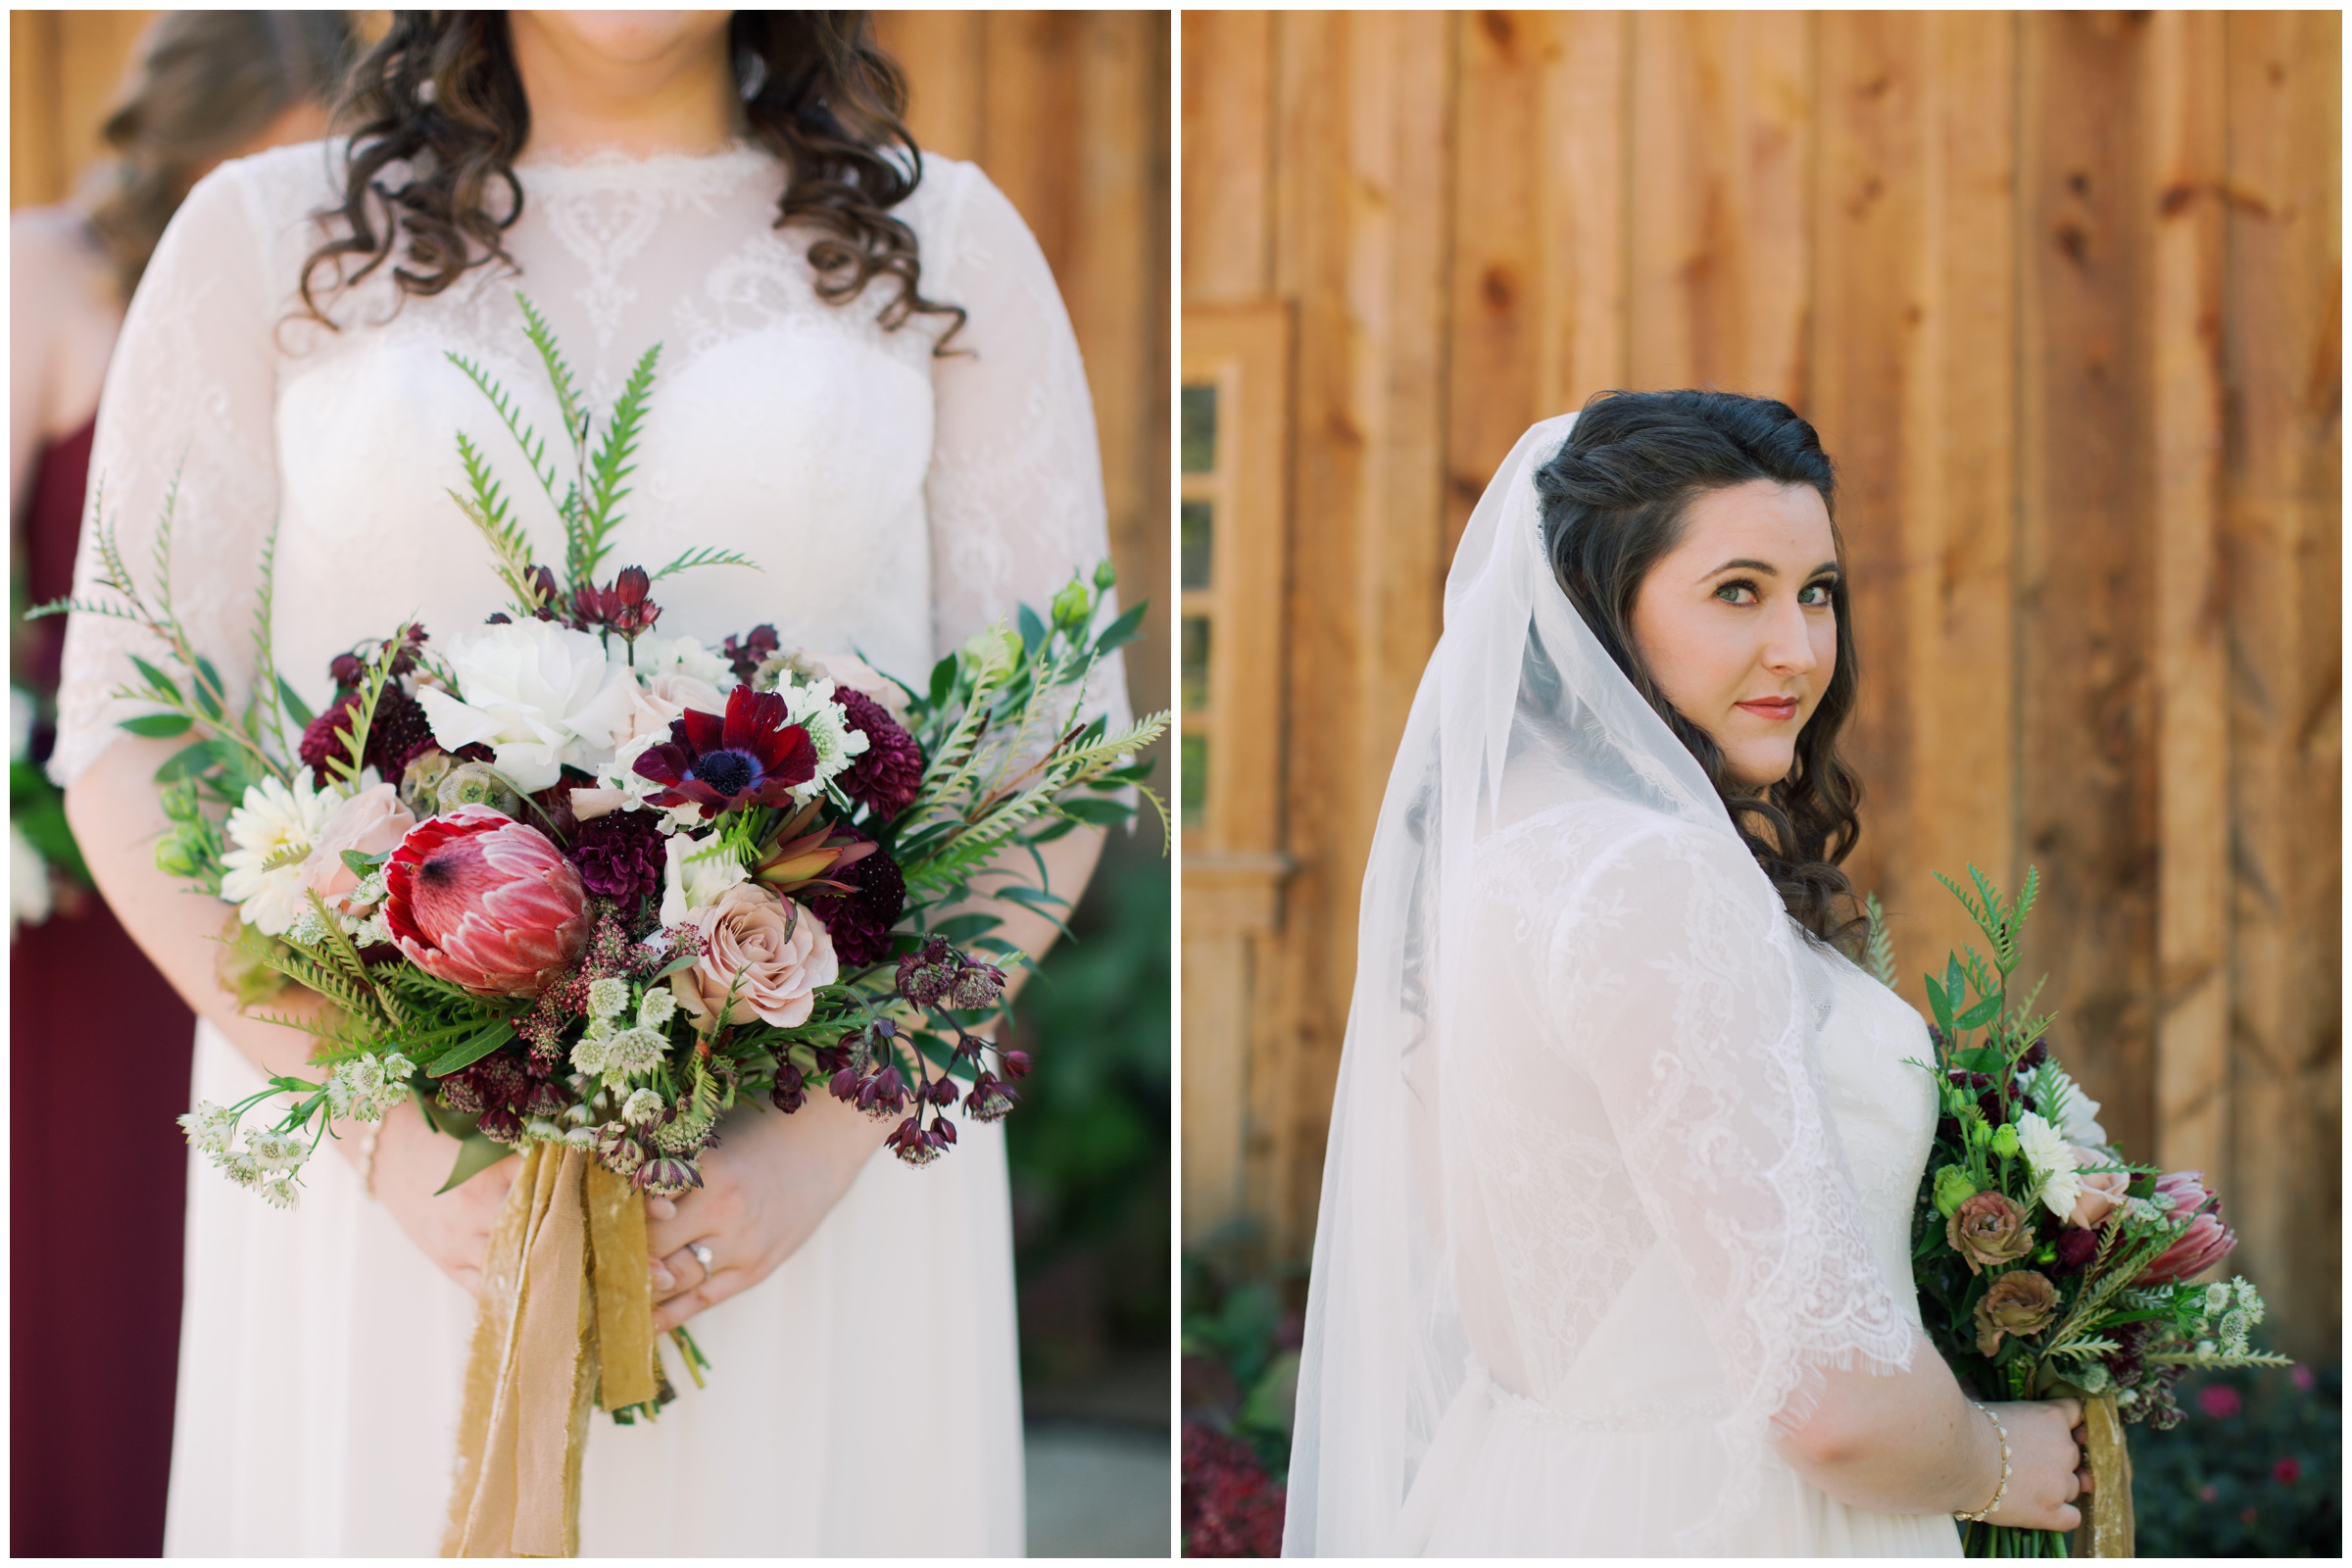 Burgundy and white wedding bouquet inspiration, Jennifer Clapp Wedding Photography